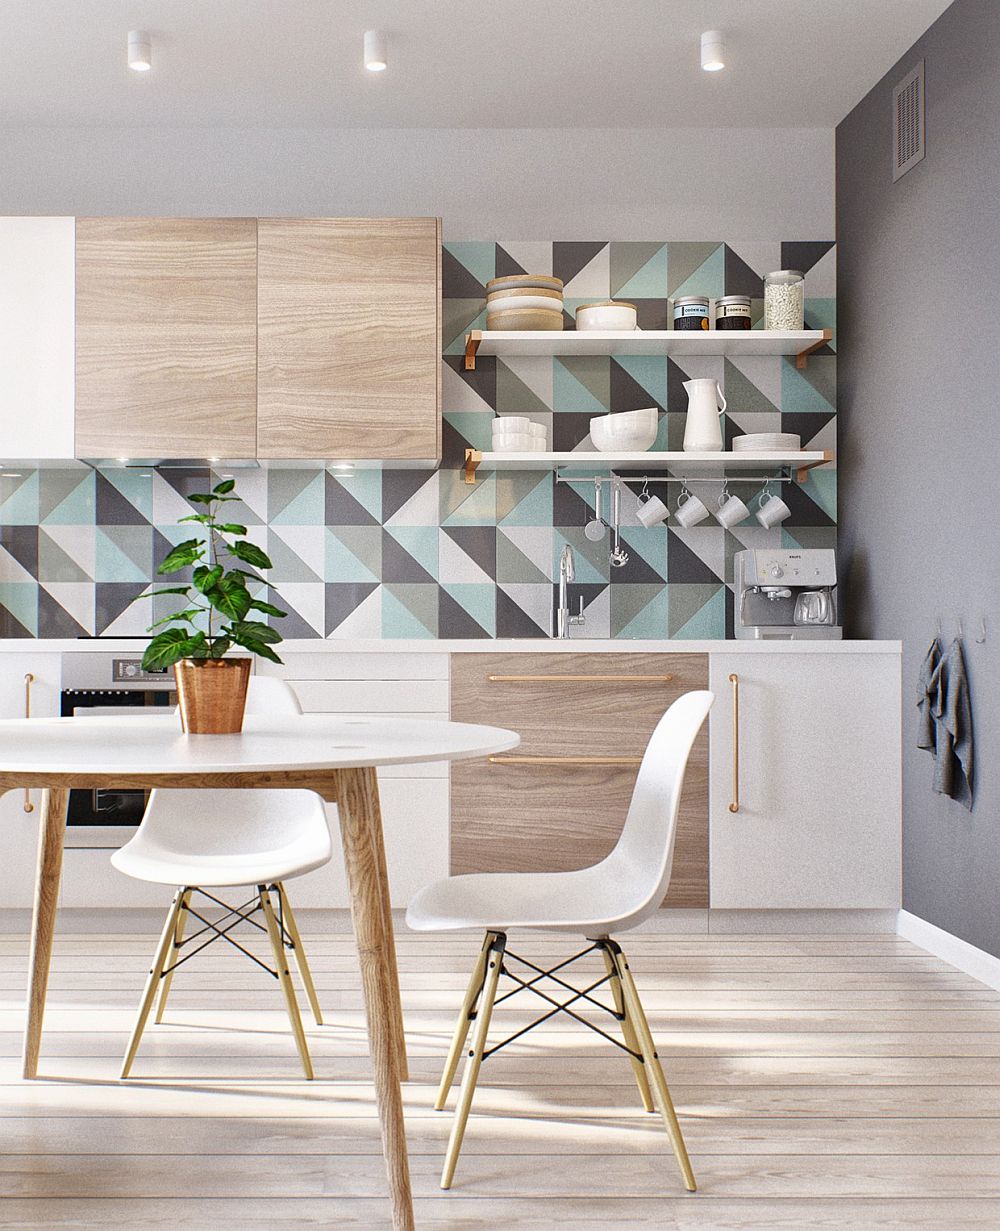 Wonderful use of geometric pattern inside the kitchen [Design: int2architecture]